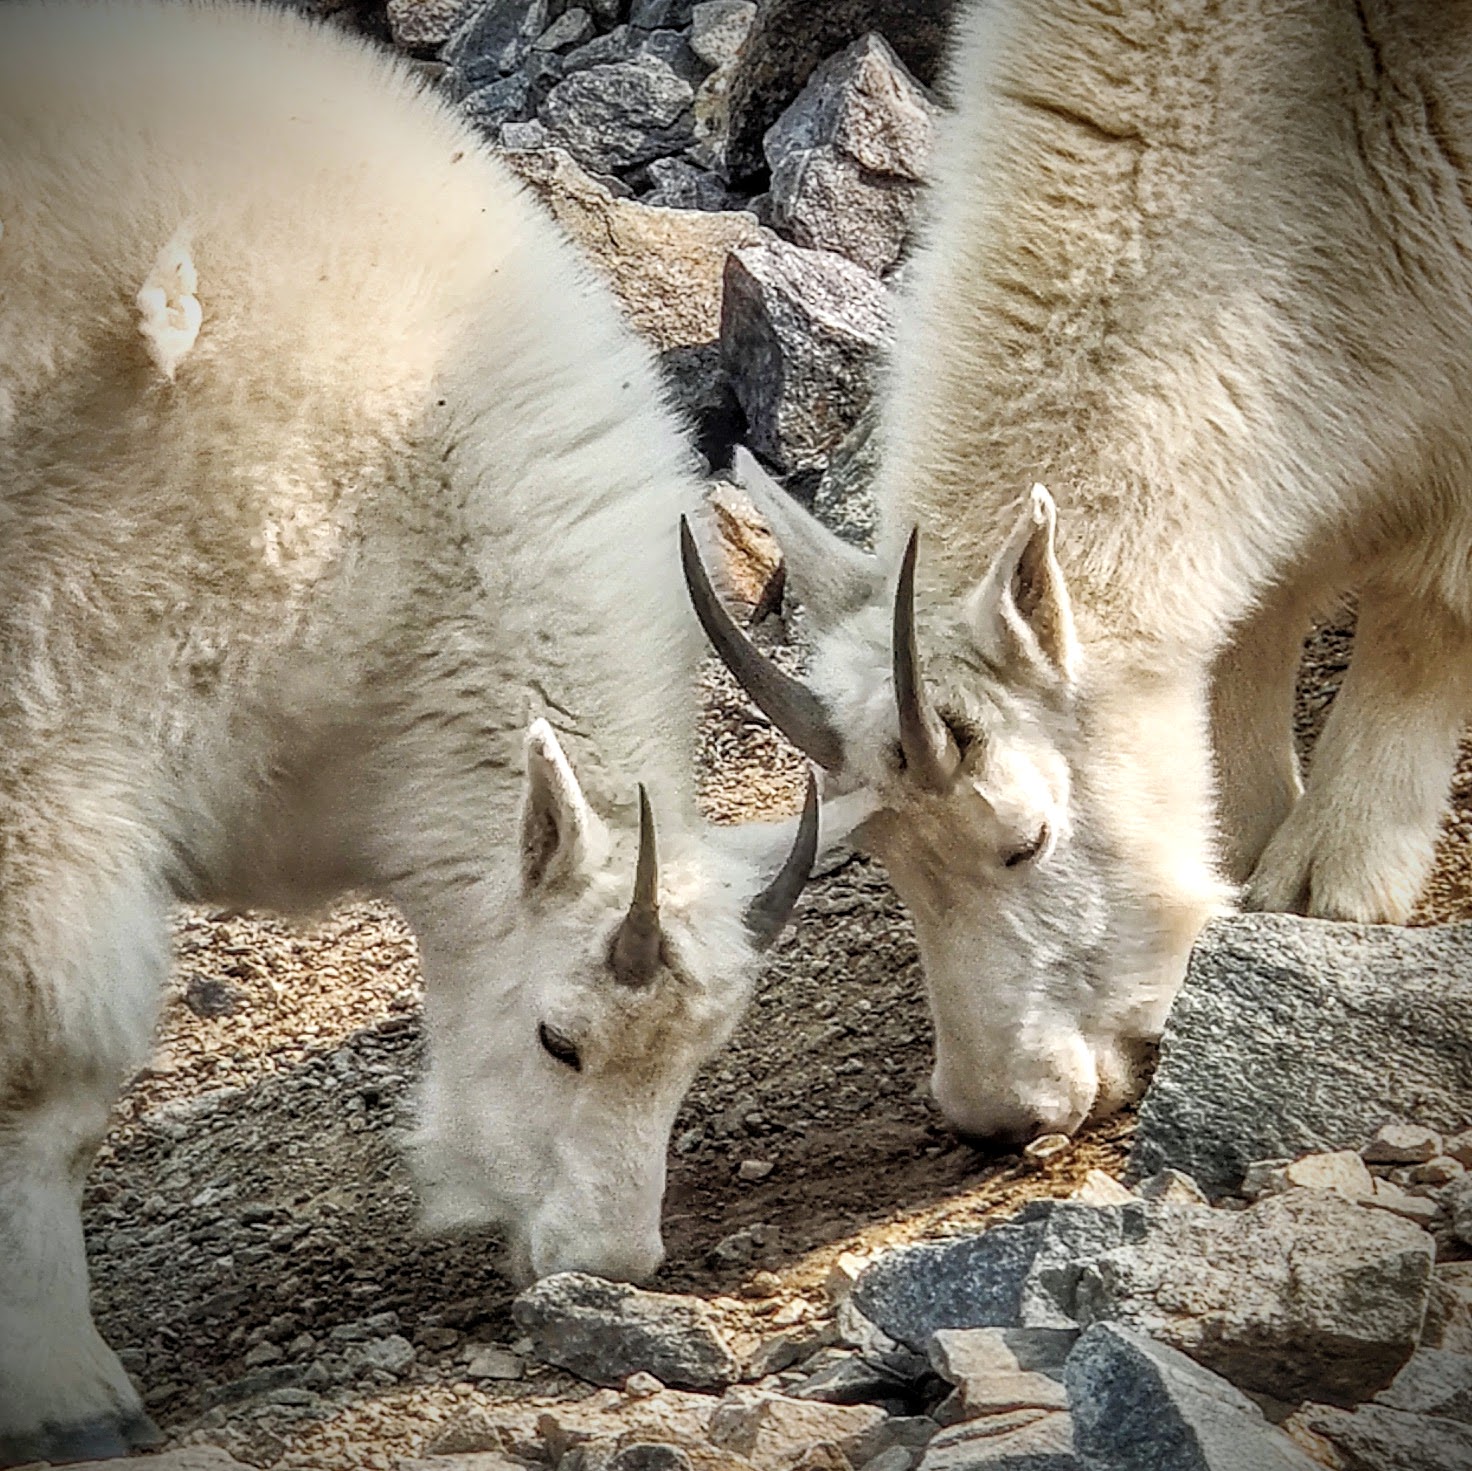 mountain goats, goats, mountains, colorado, grazing, white, fur, horns, rocks, close up